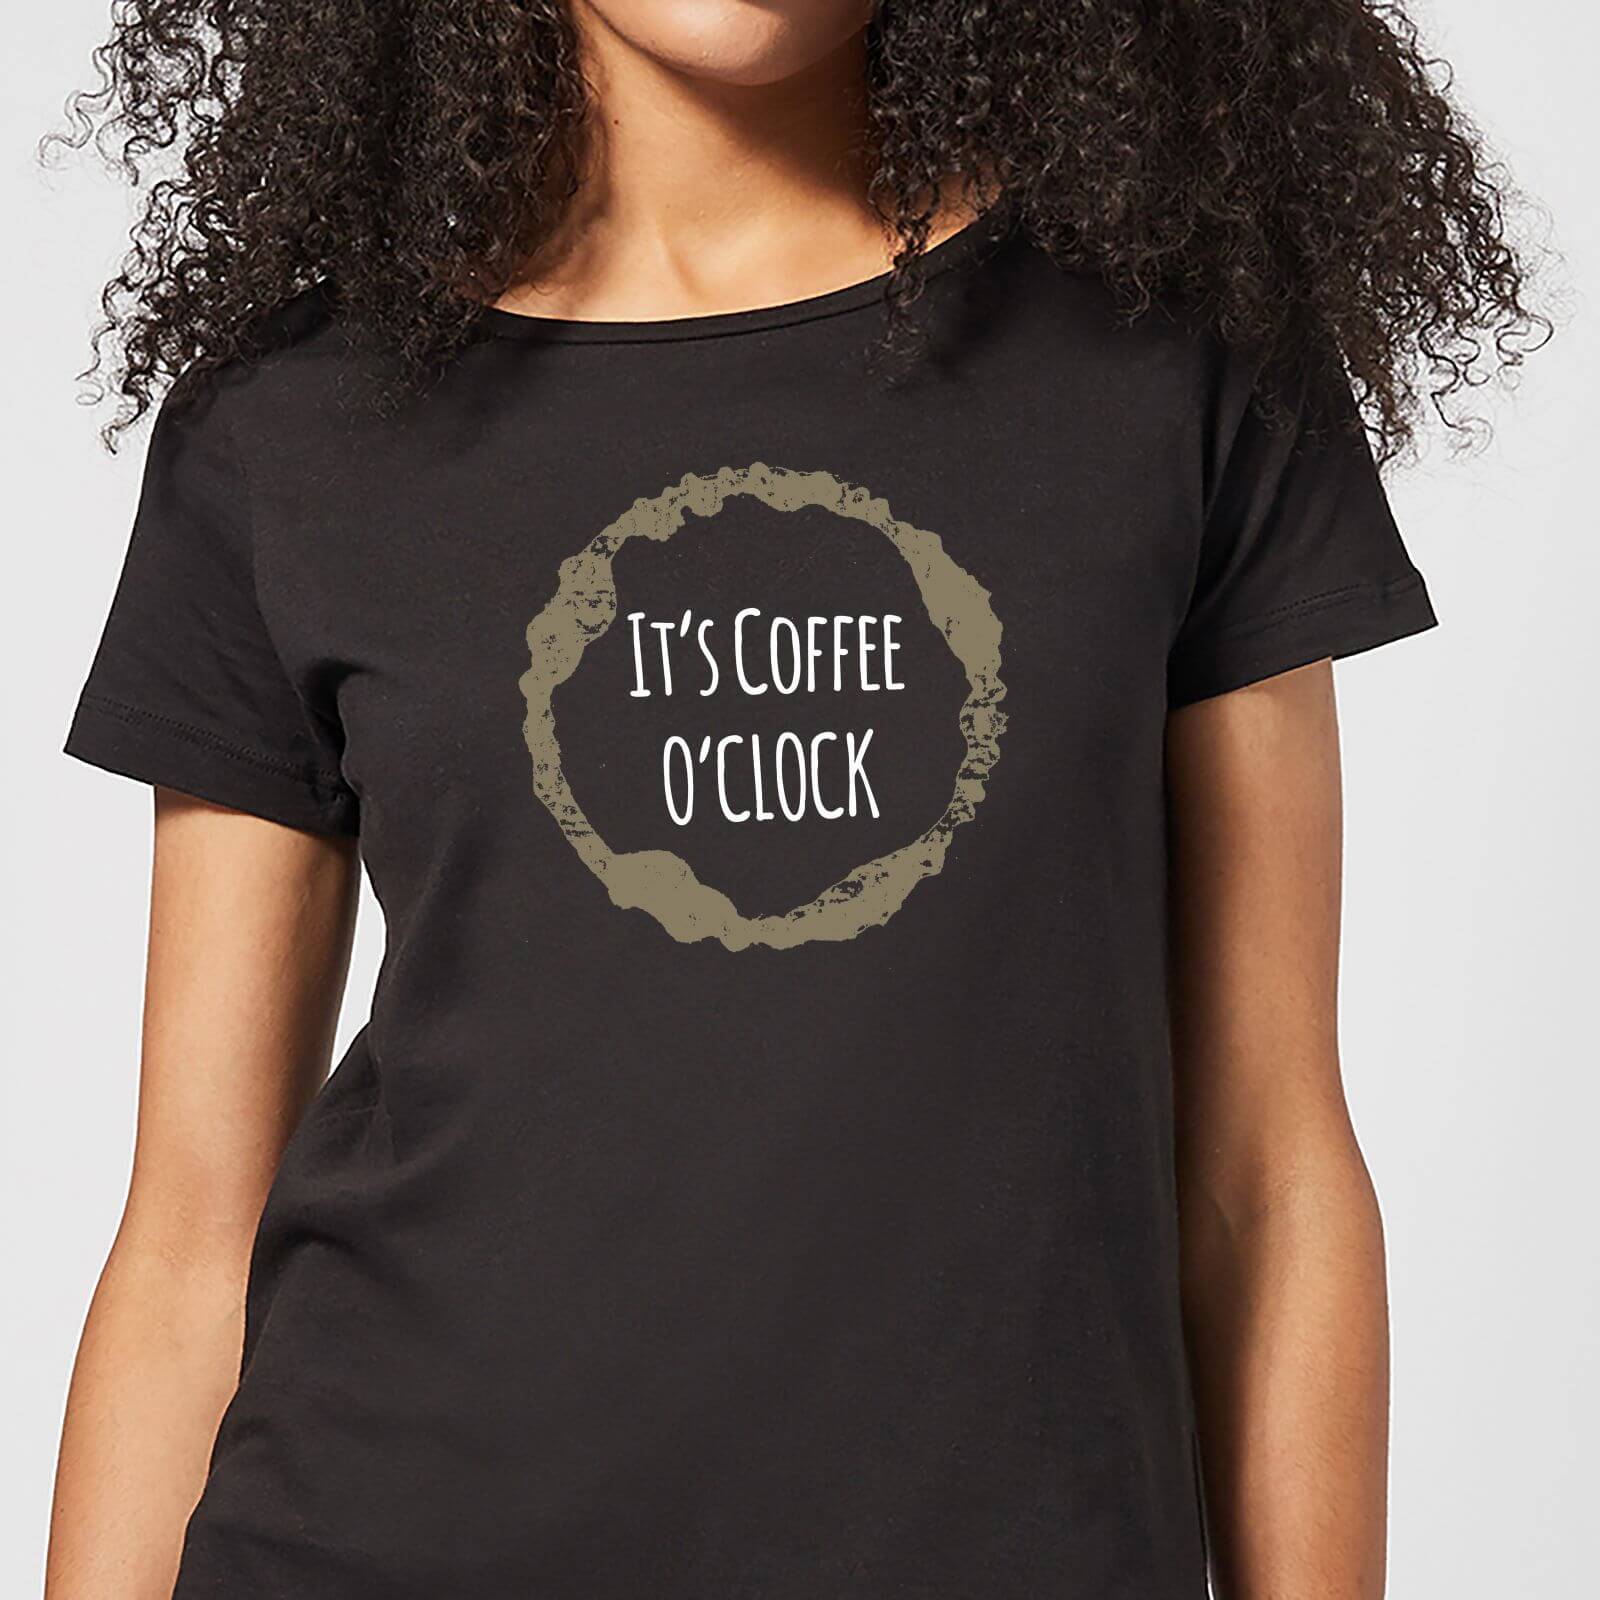 It's Coffee O'Clock Women's T-Shirt - Black - 3XL - Black